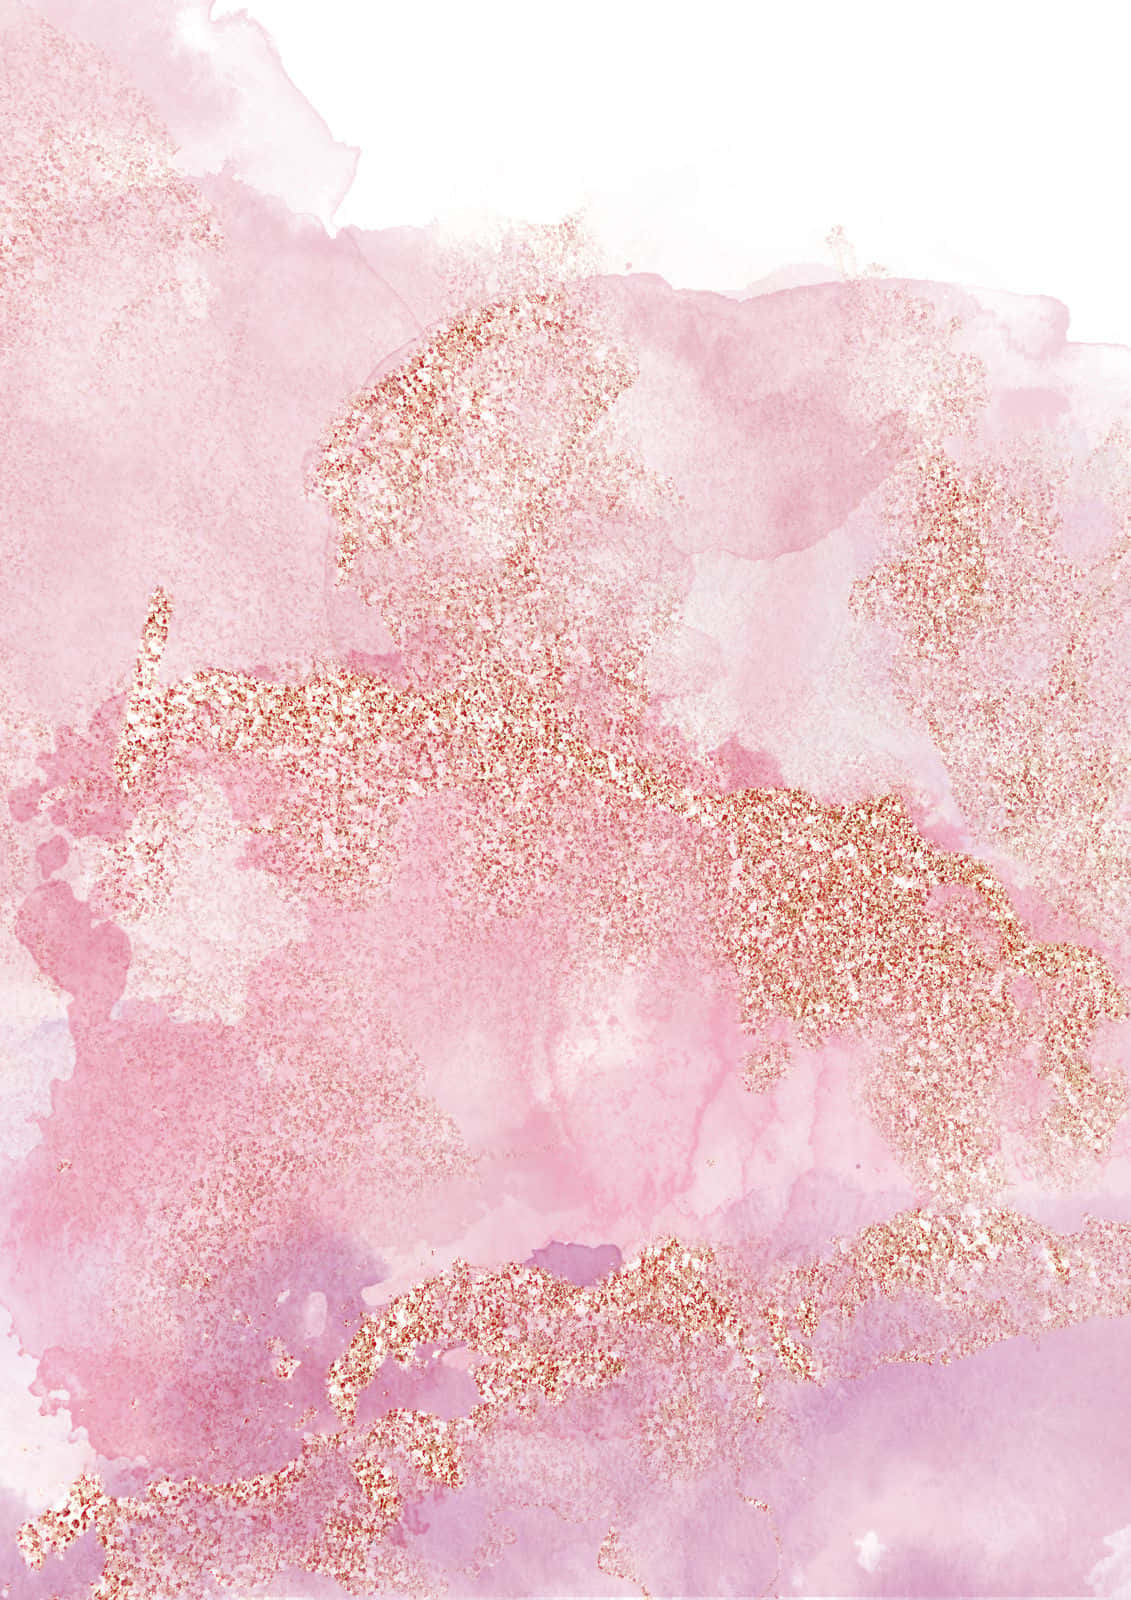 Rose Gold Watercolor Texture Wallpaper